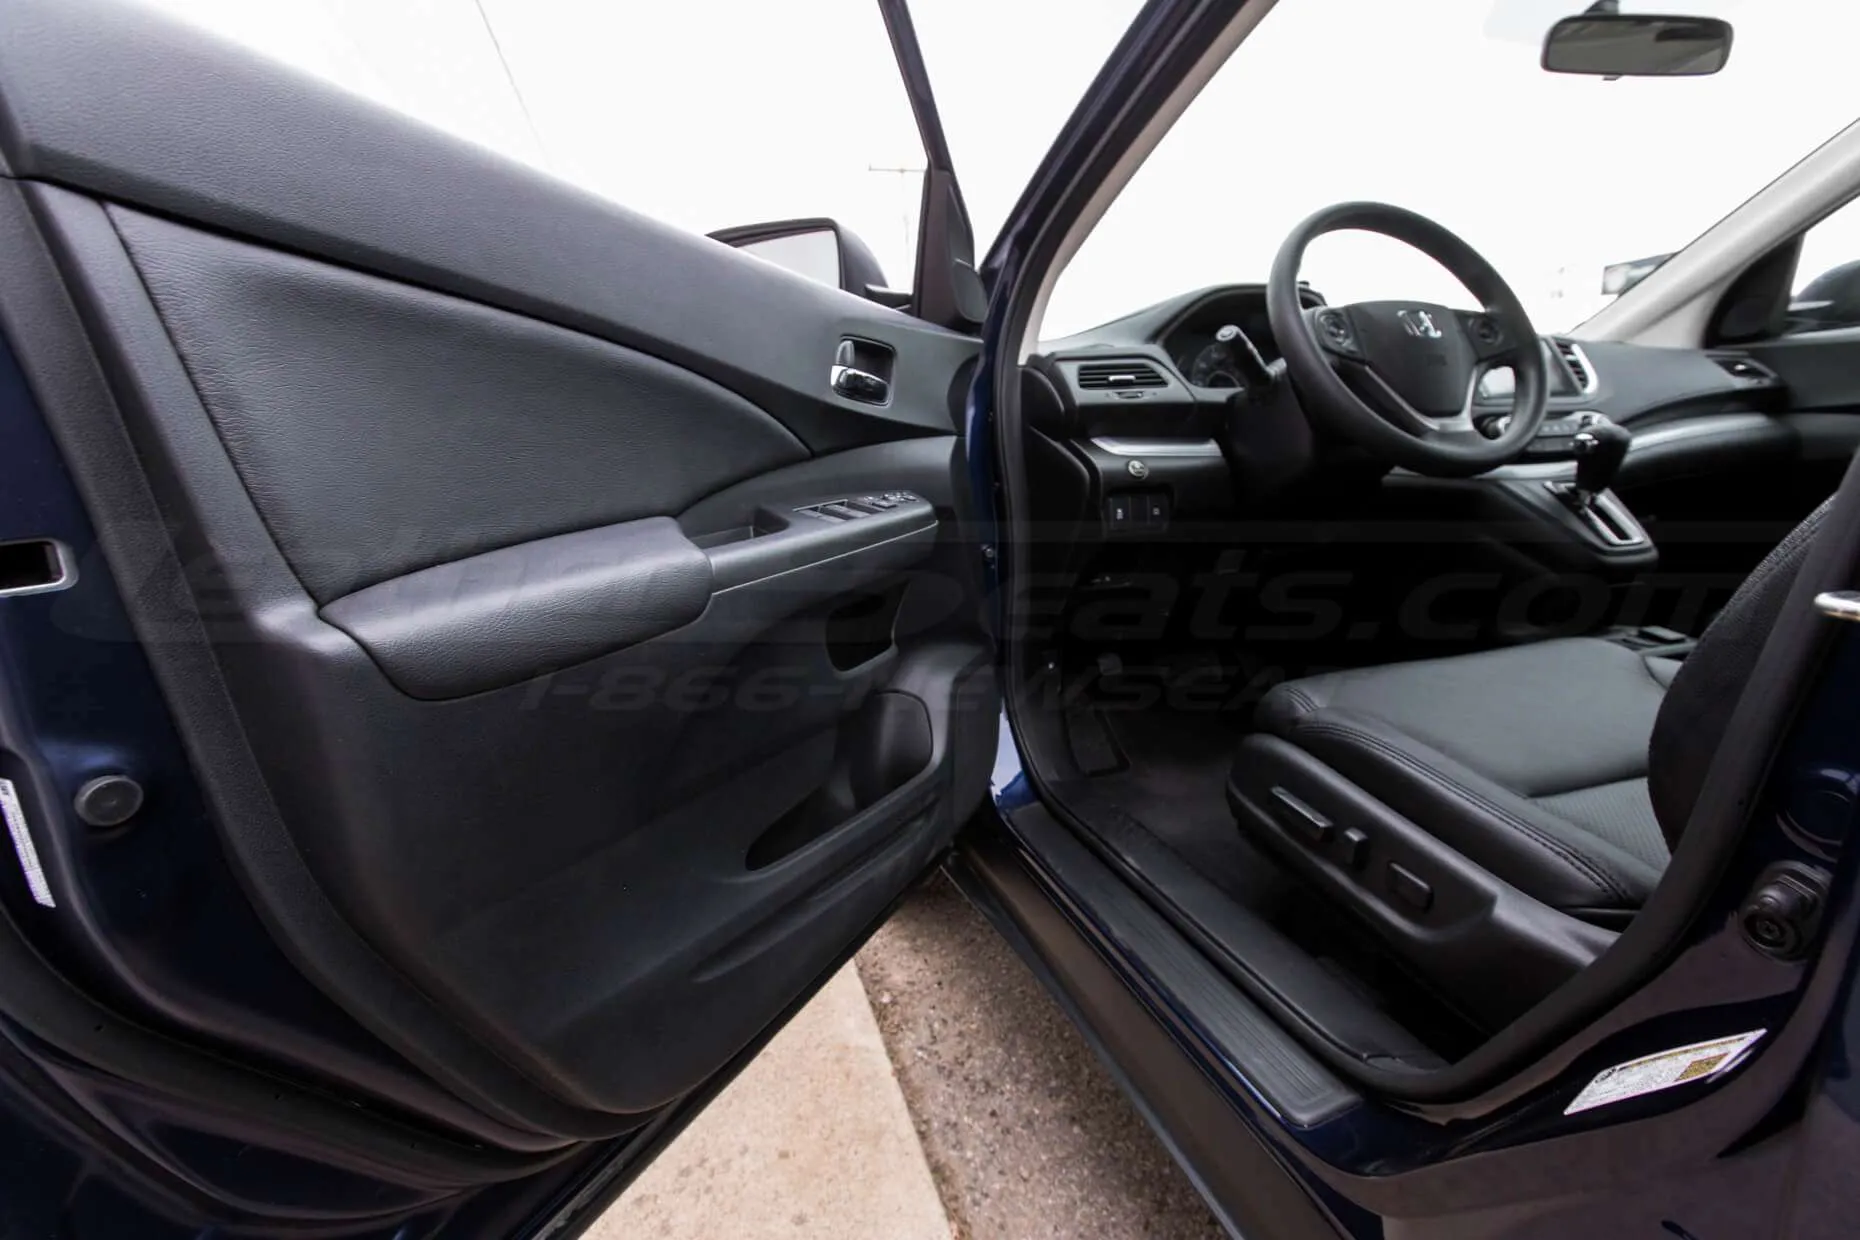 Honda CRV Leather Seat Kit - Black - Installed - Door insert and armrest